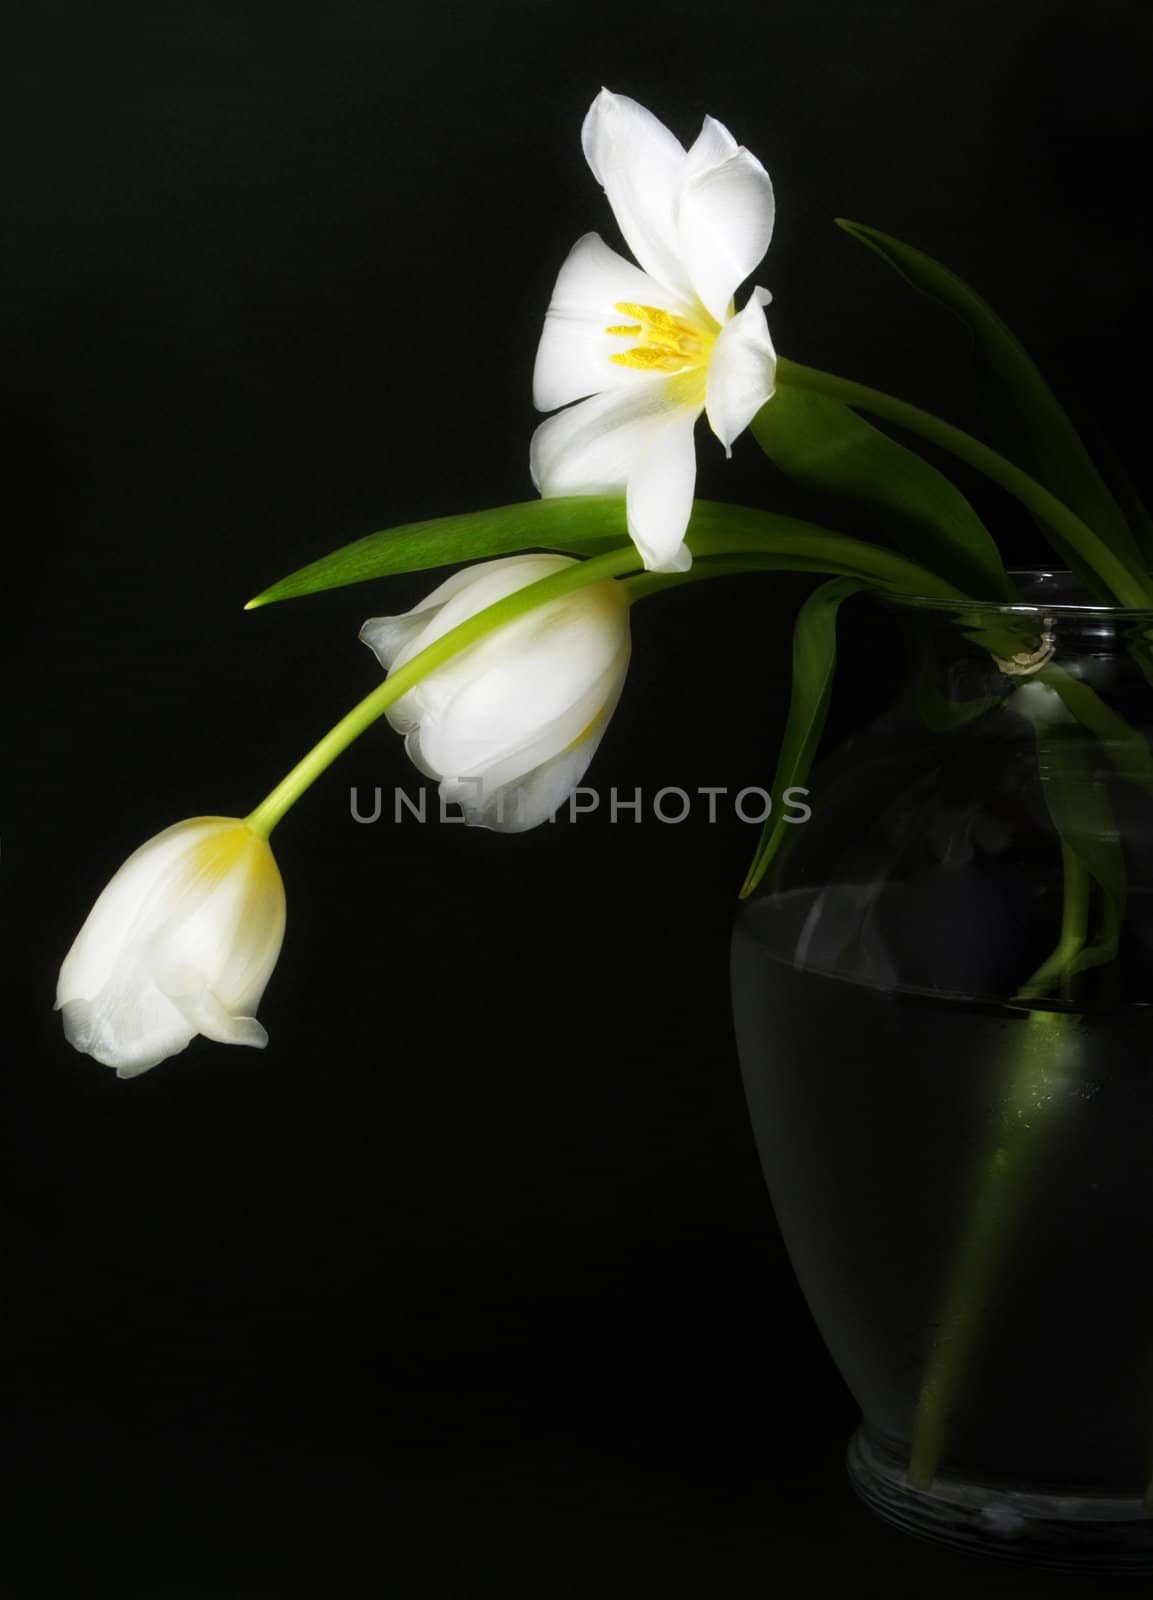 Three white tulips on a transparent vase, black background